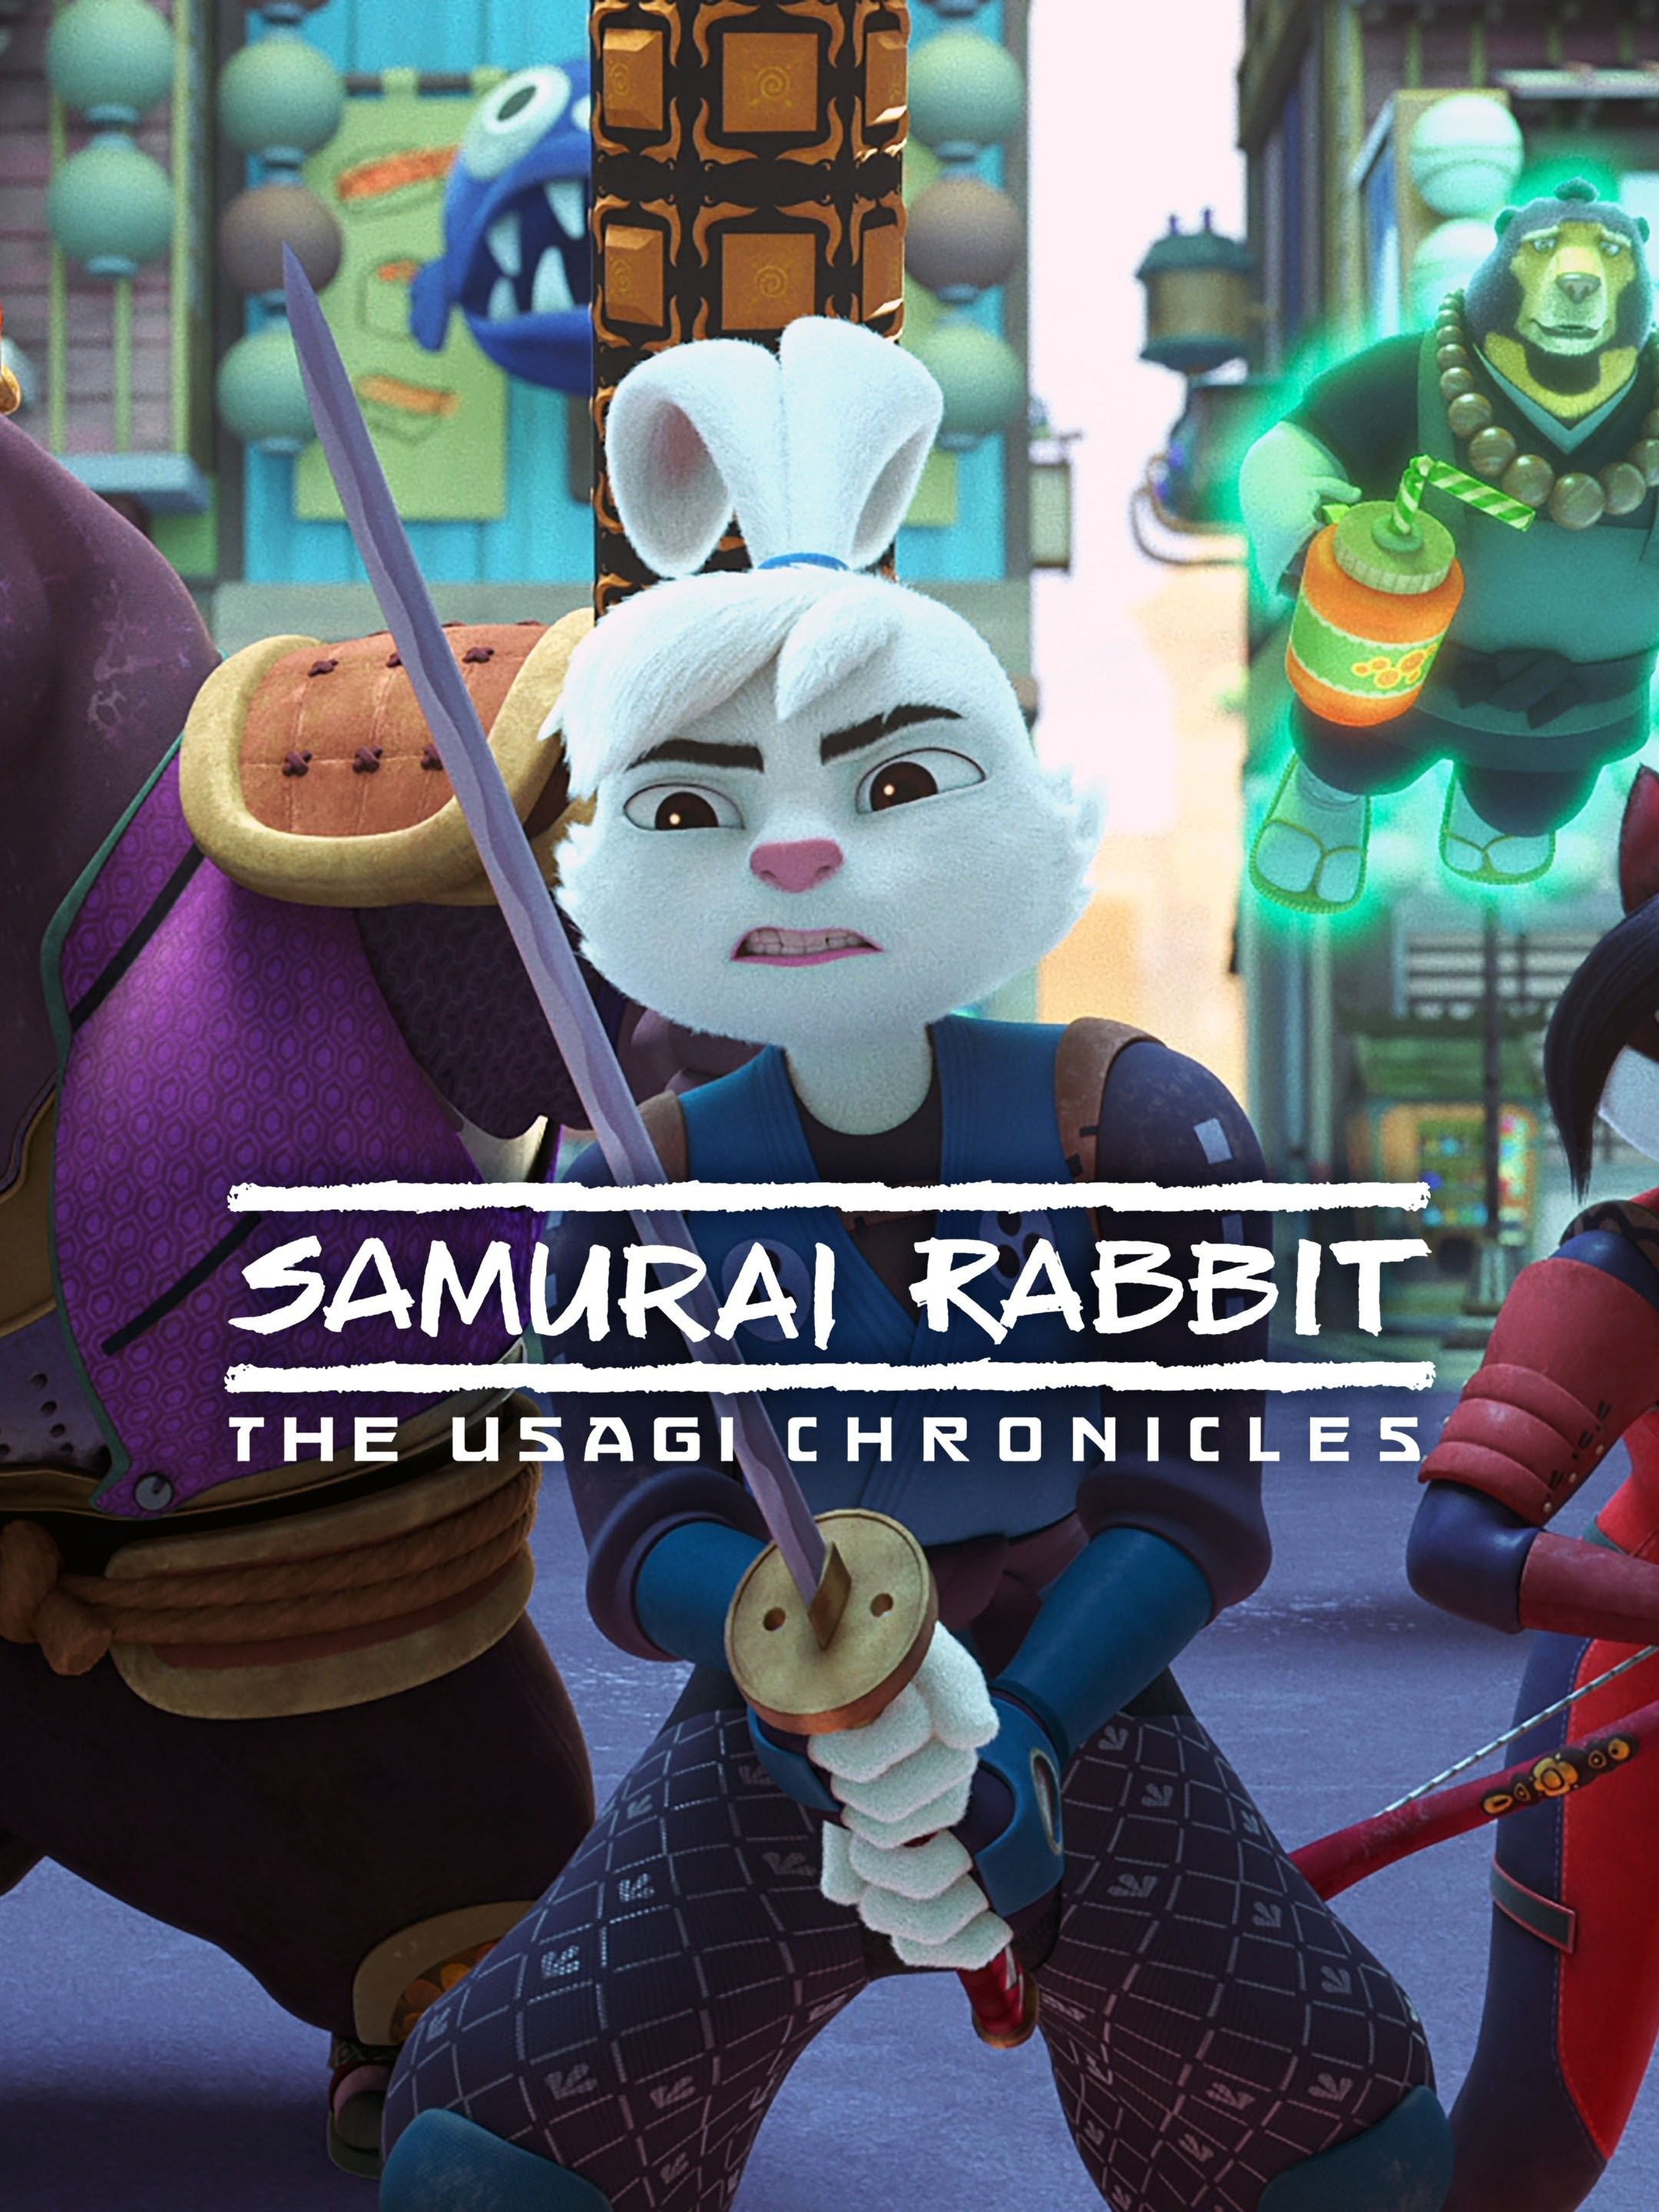 RABBIT SAMURAI 2 - Play Online for Free!